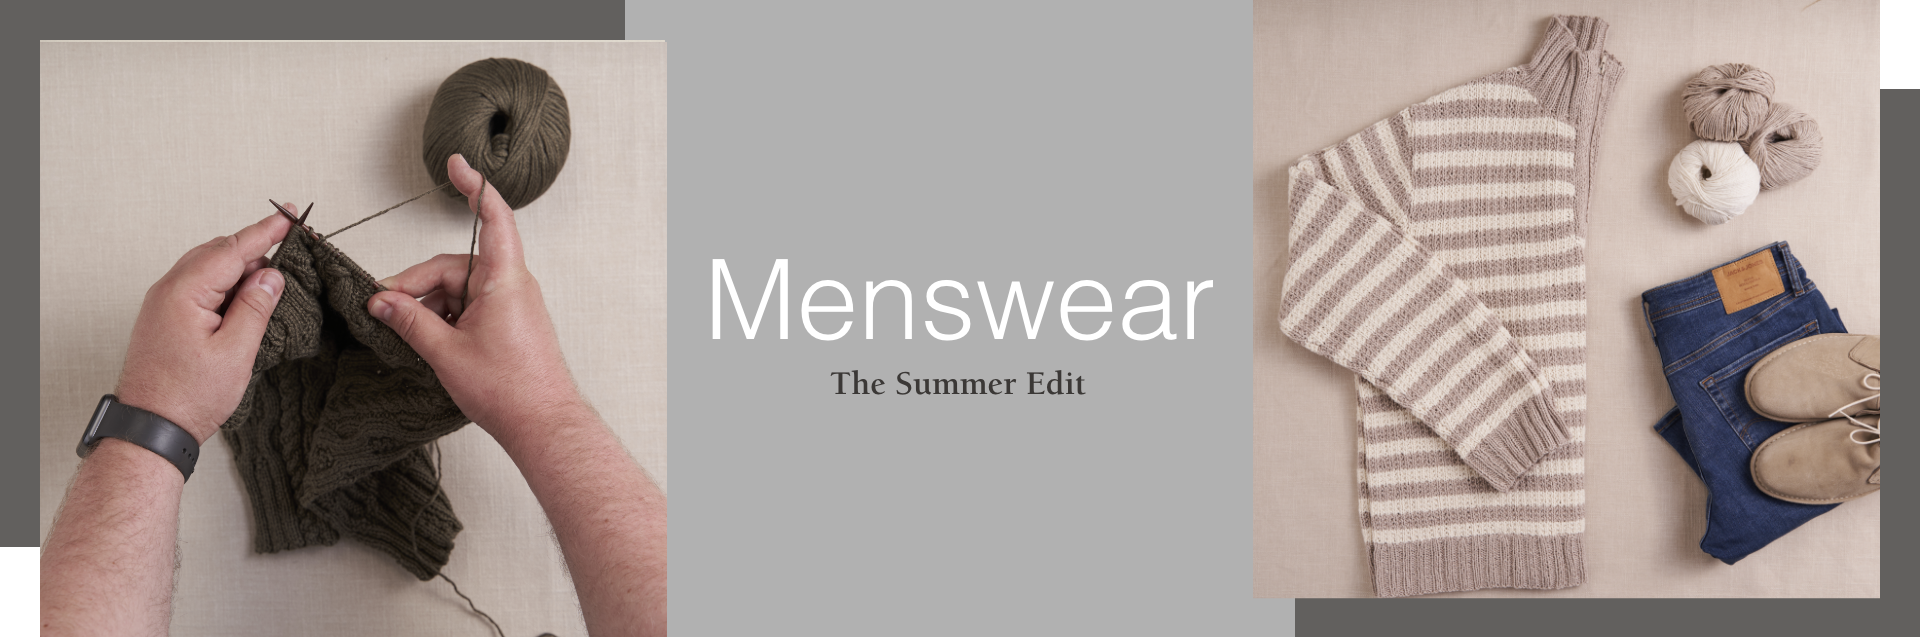 Menswear The Summer Edit banner